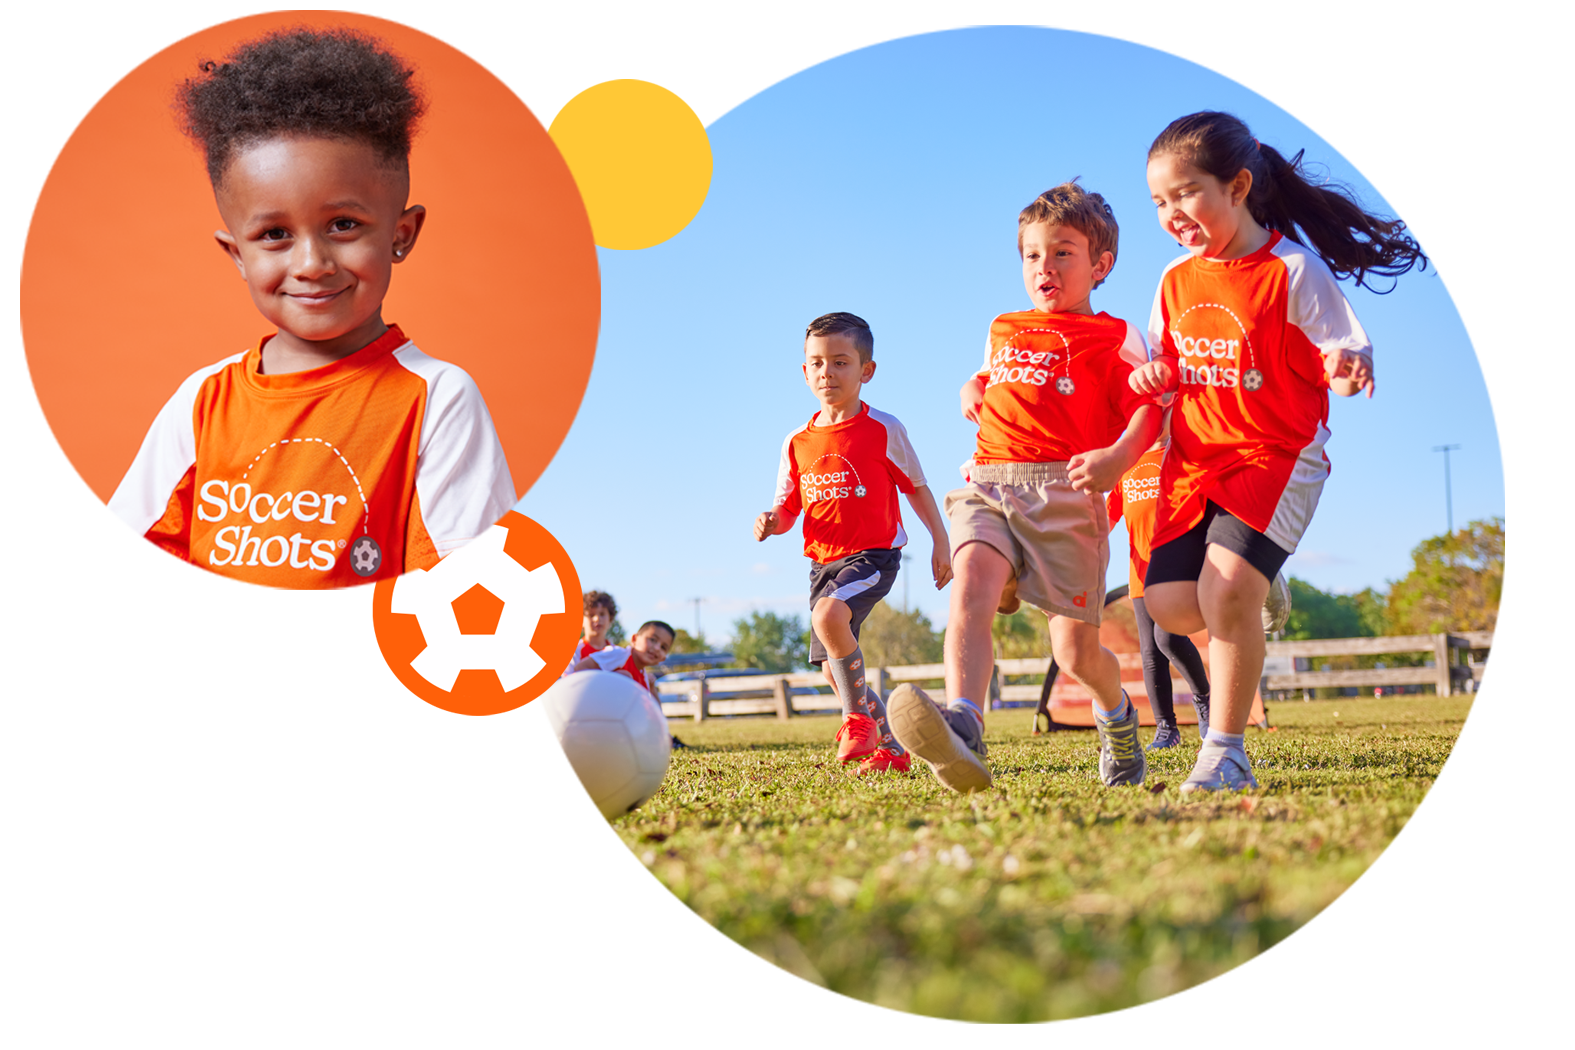 Boy in Soccer Shots jersey smiling; Group of children running towards soccer ball